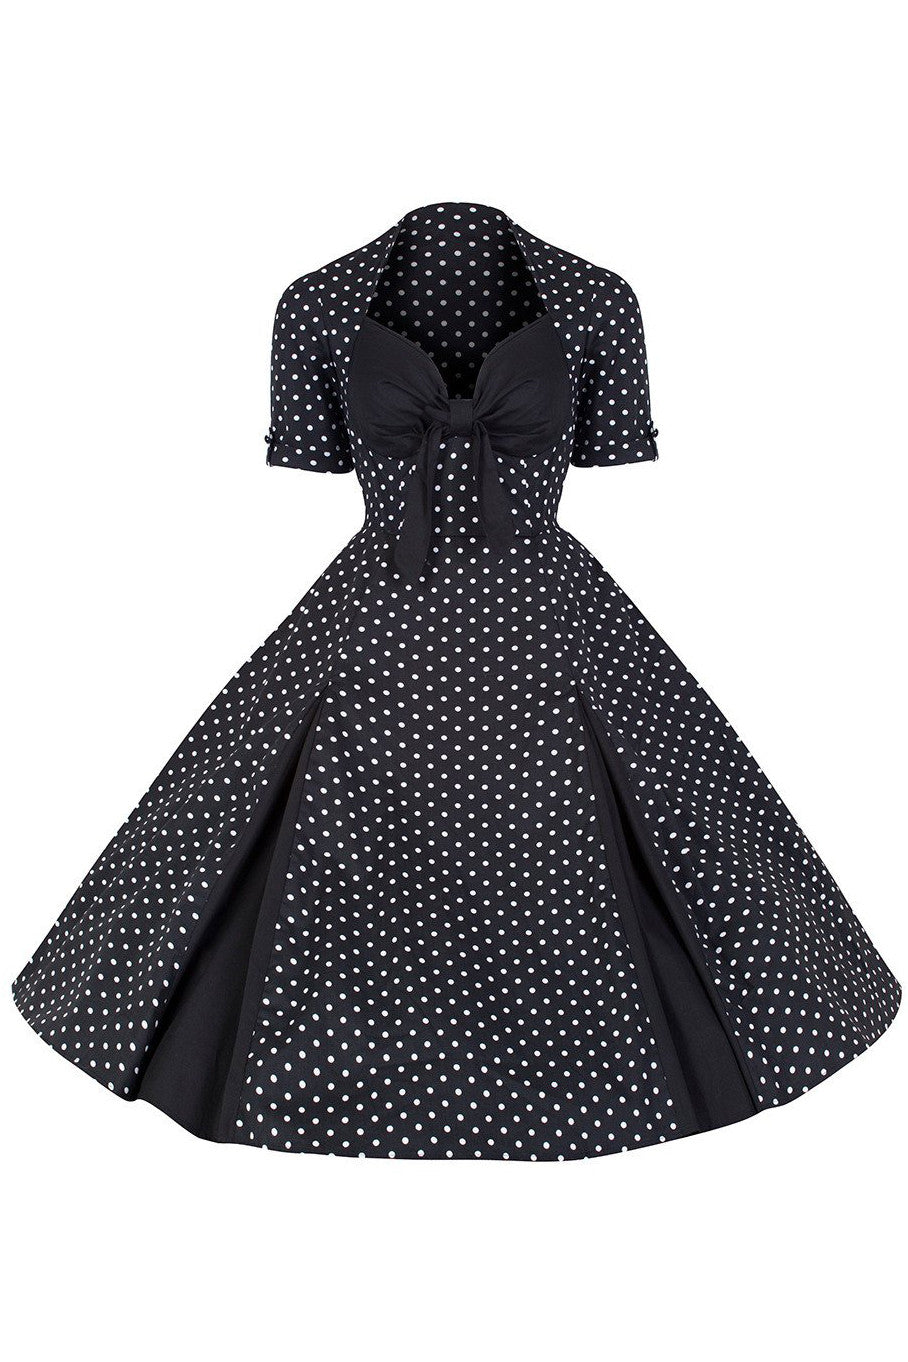 Black and White Polka Dot Retro 50s Swing Dress - Pretty Kitty Fashion